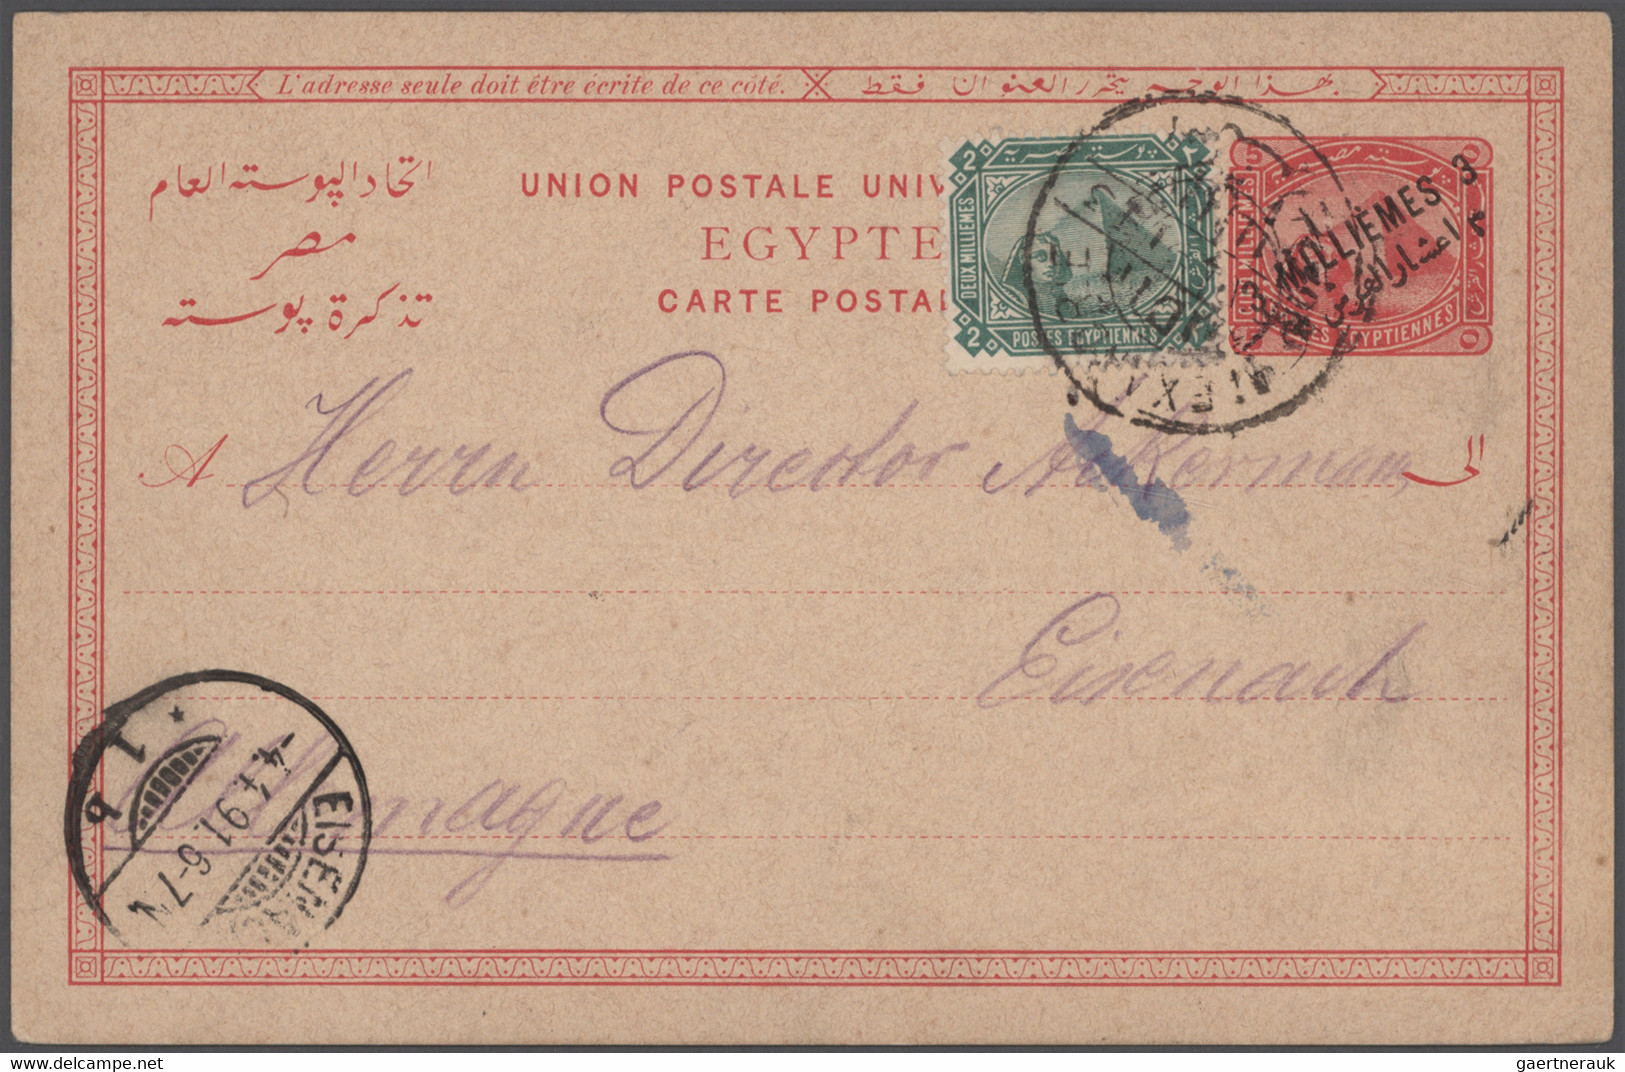 Egypt - postal stationery: 1879-1914, collection of about 100 postal stationery